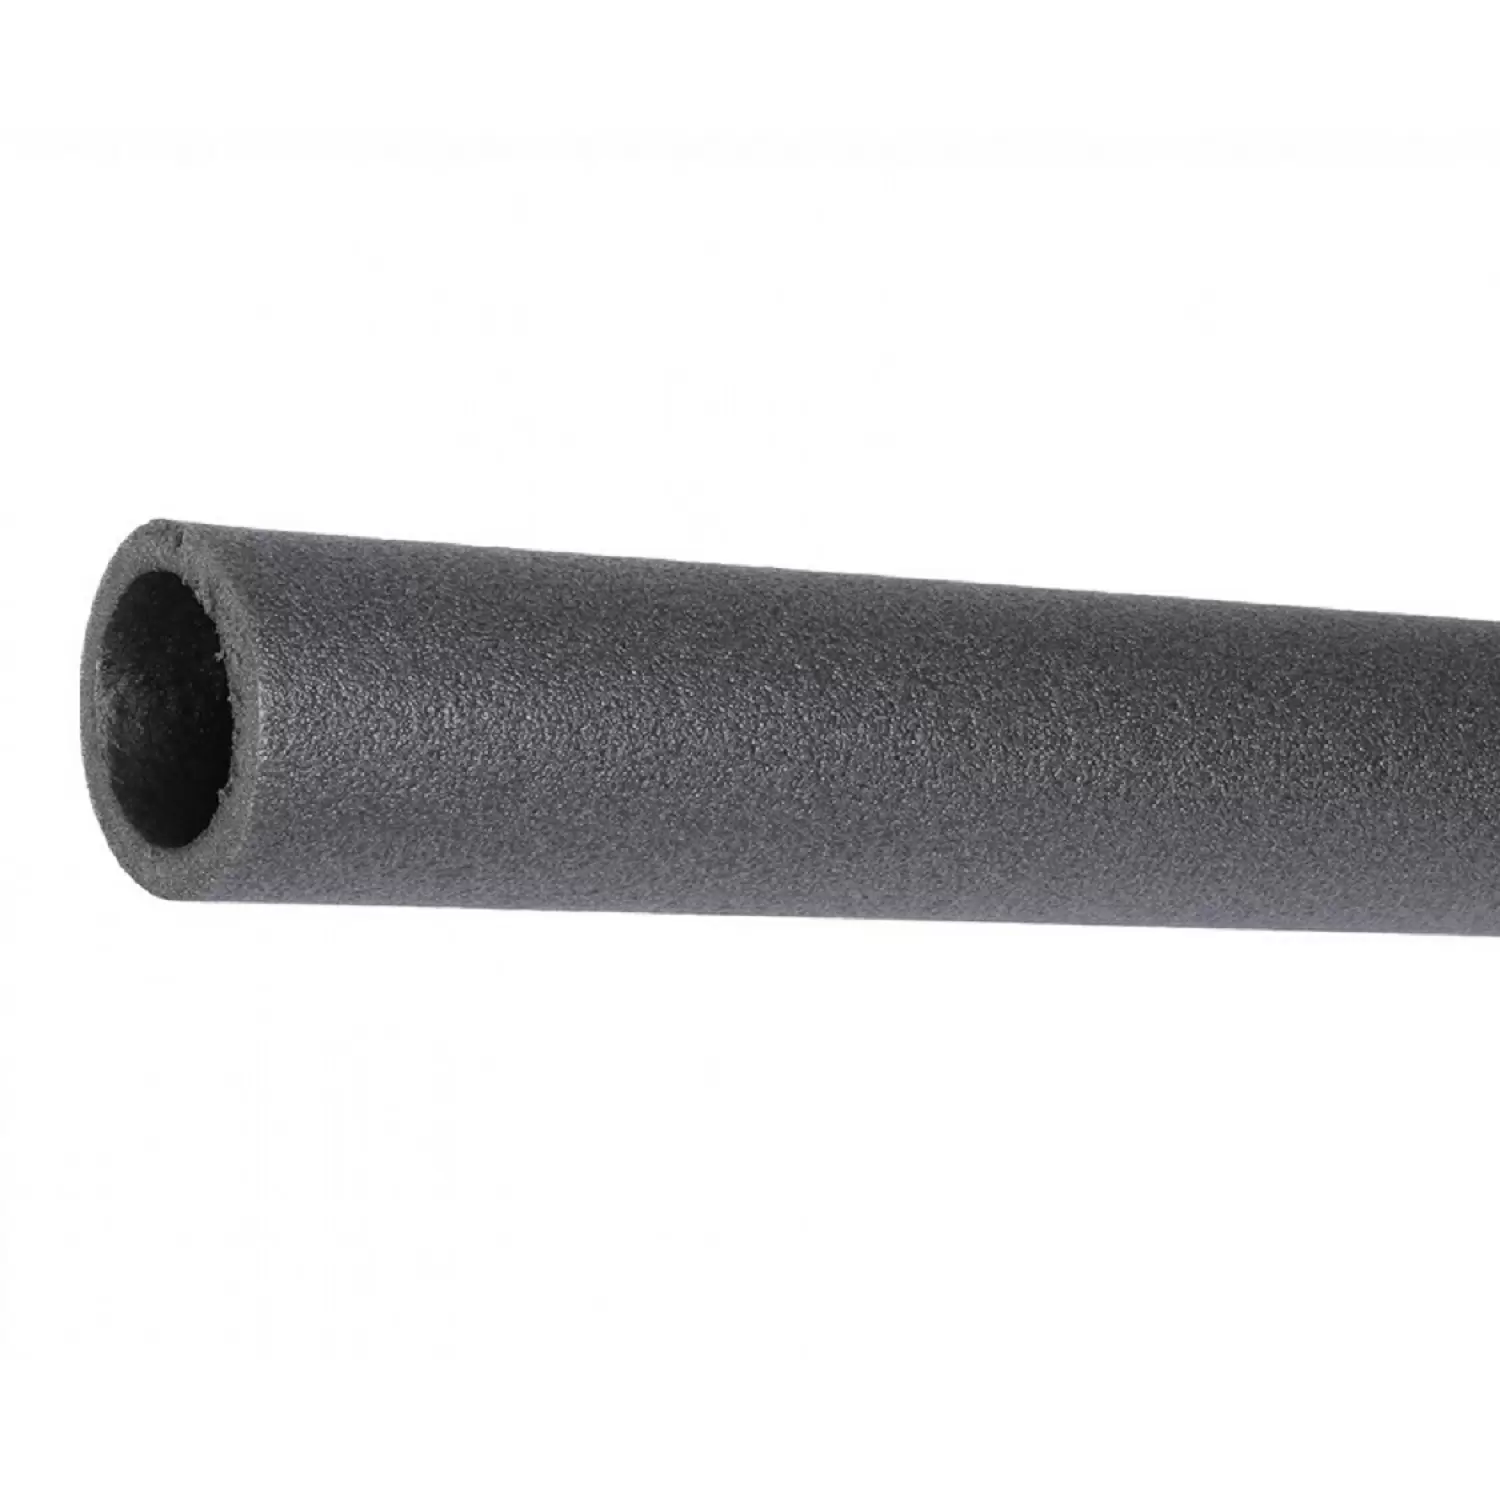 Теплоизоляция Энергофлекс супер 22/6 для труб диаметром 20 мм, трубка 2 м